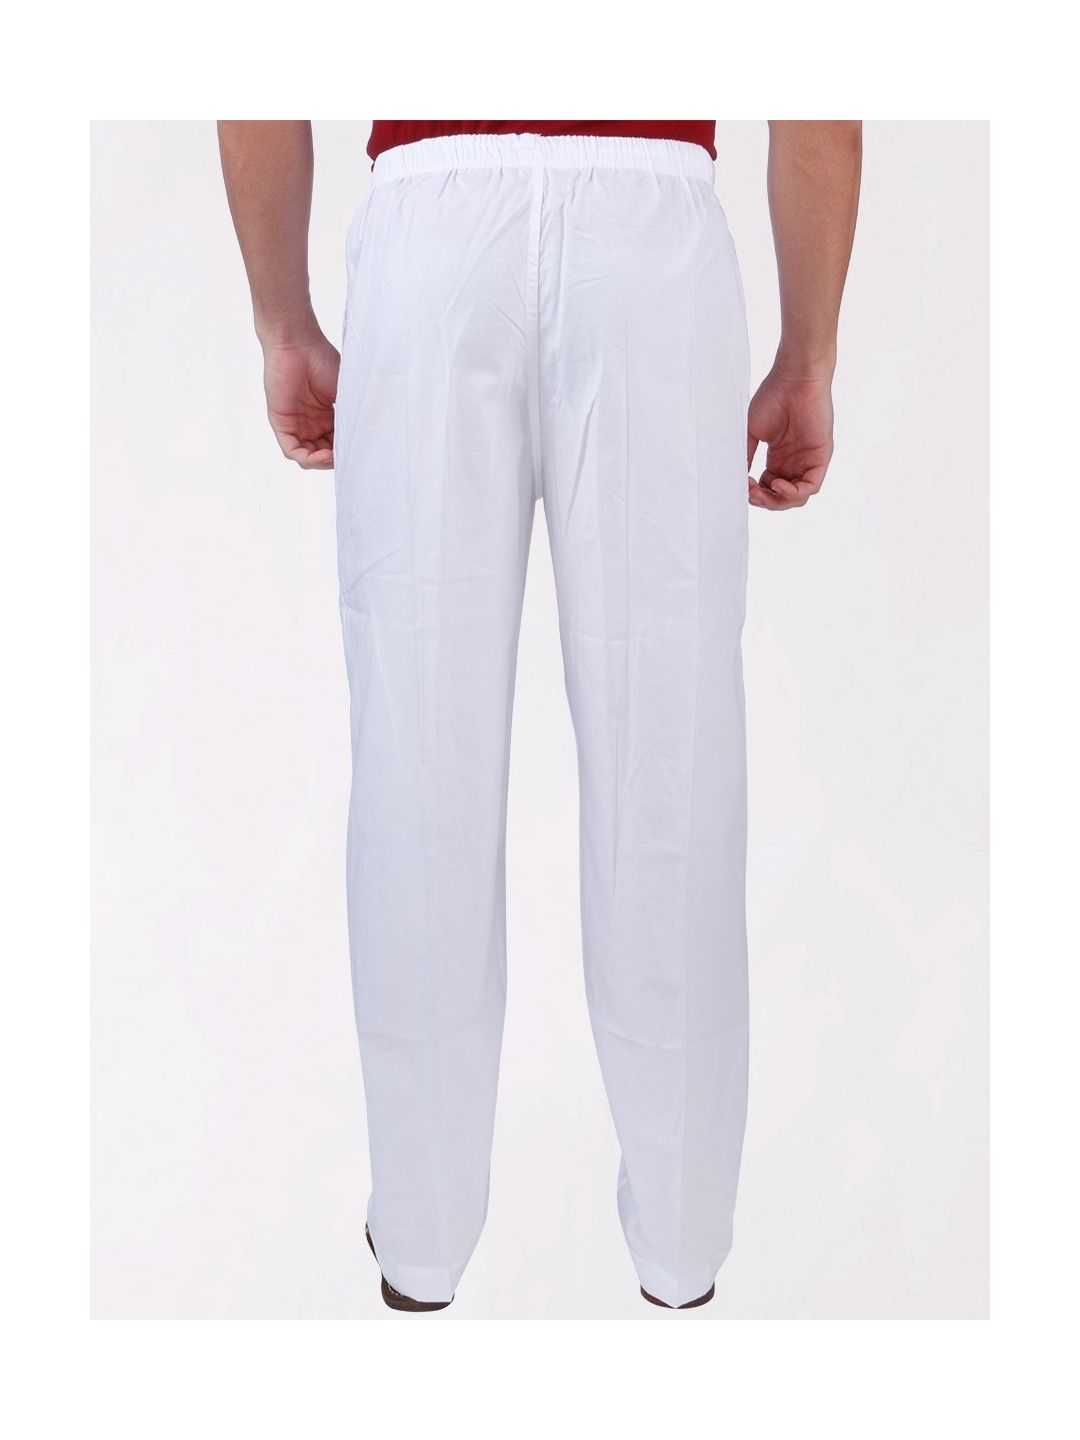 Pajama, Buy White Cotton Elastic Pajama Online In India